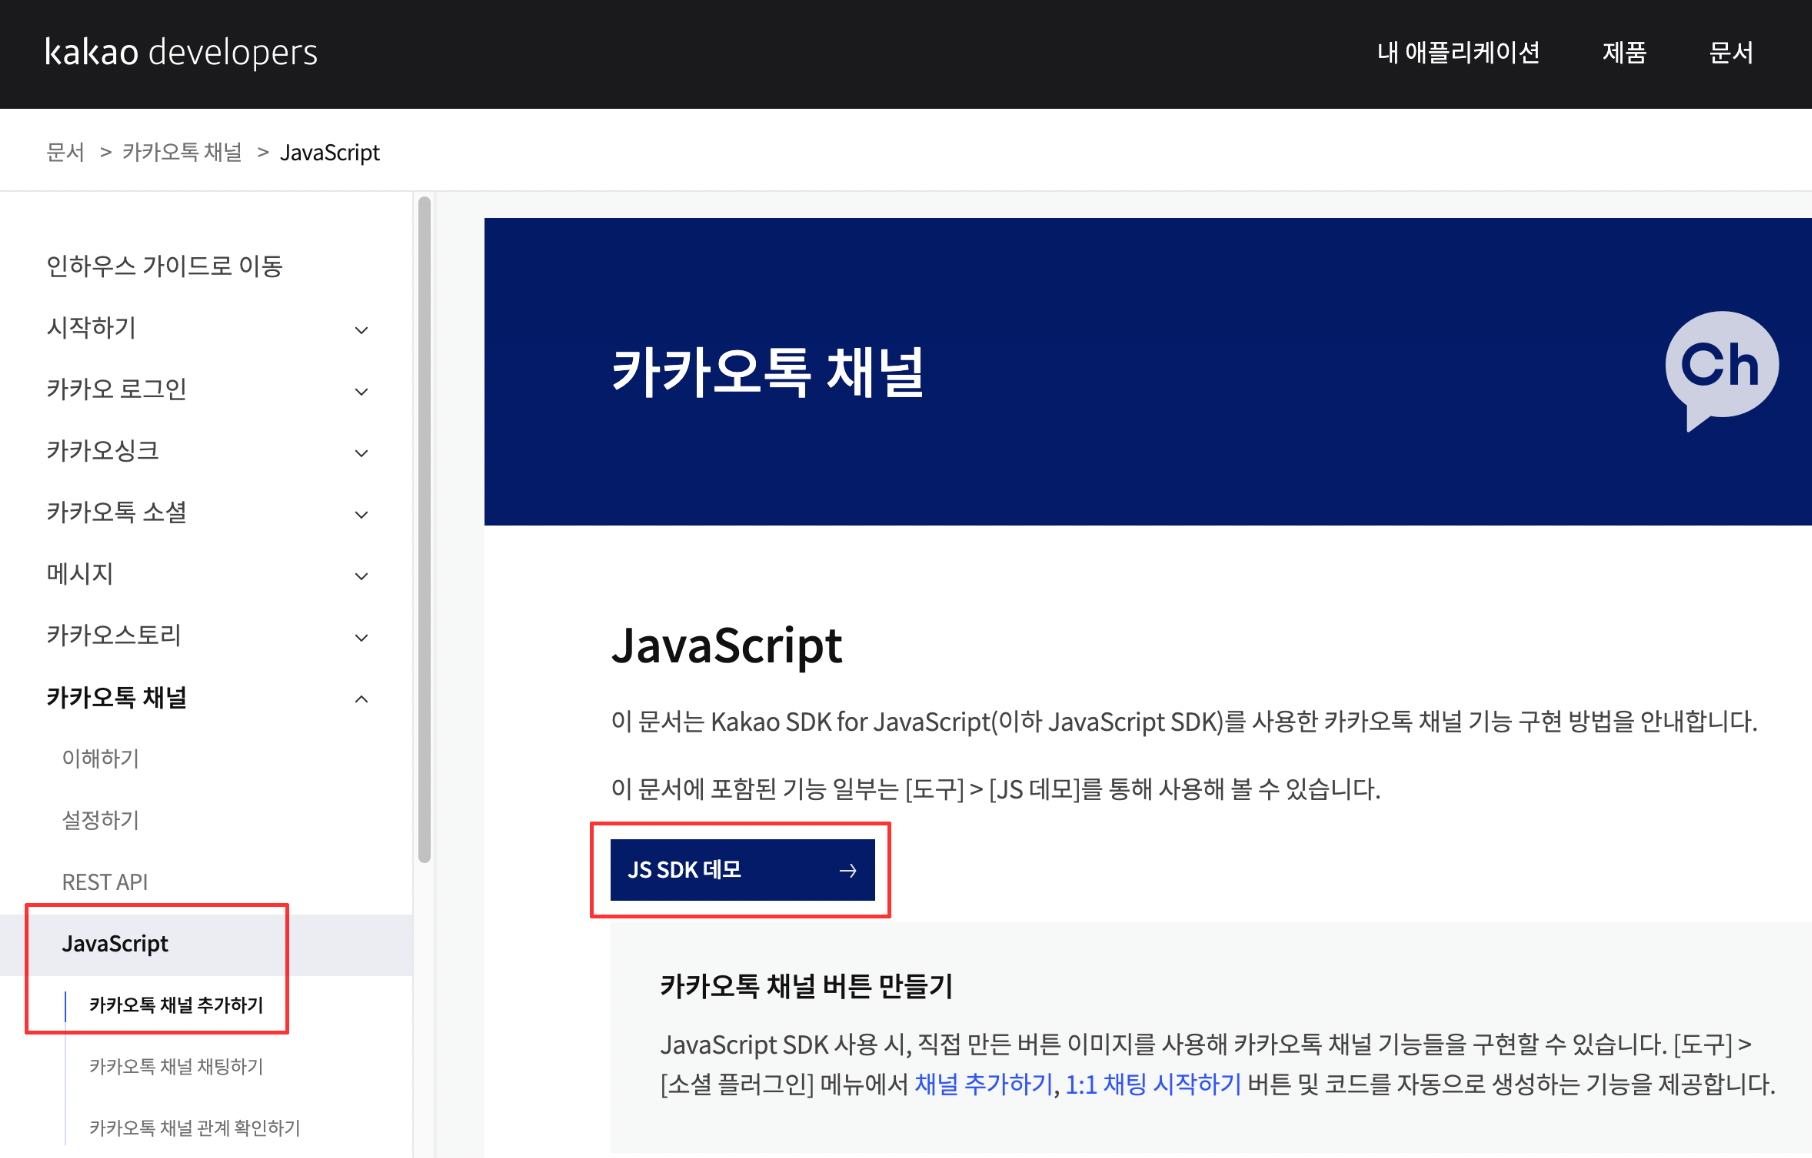 JavaScript &gt; JS SDK 데모 클릭